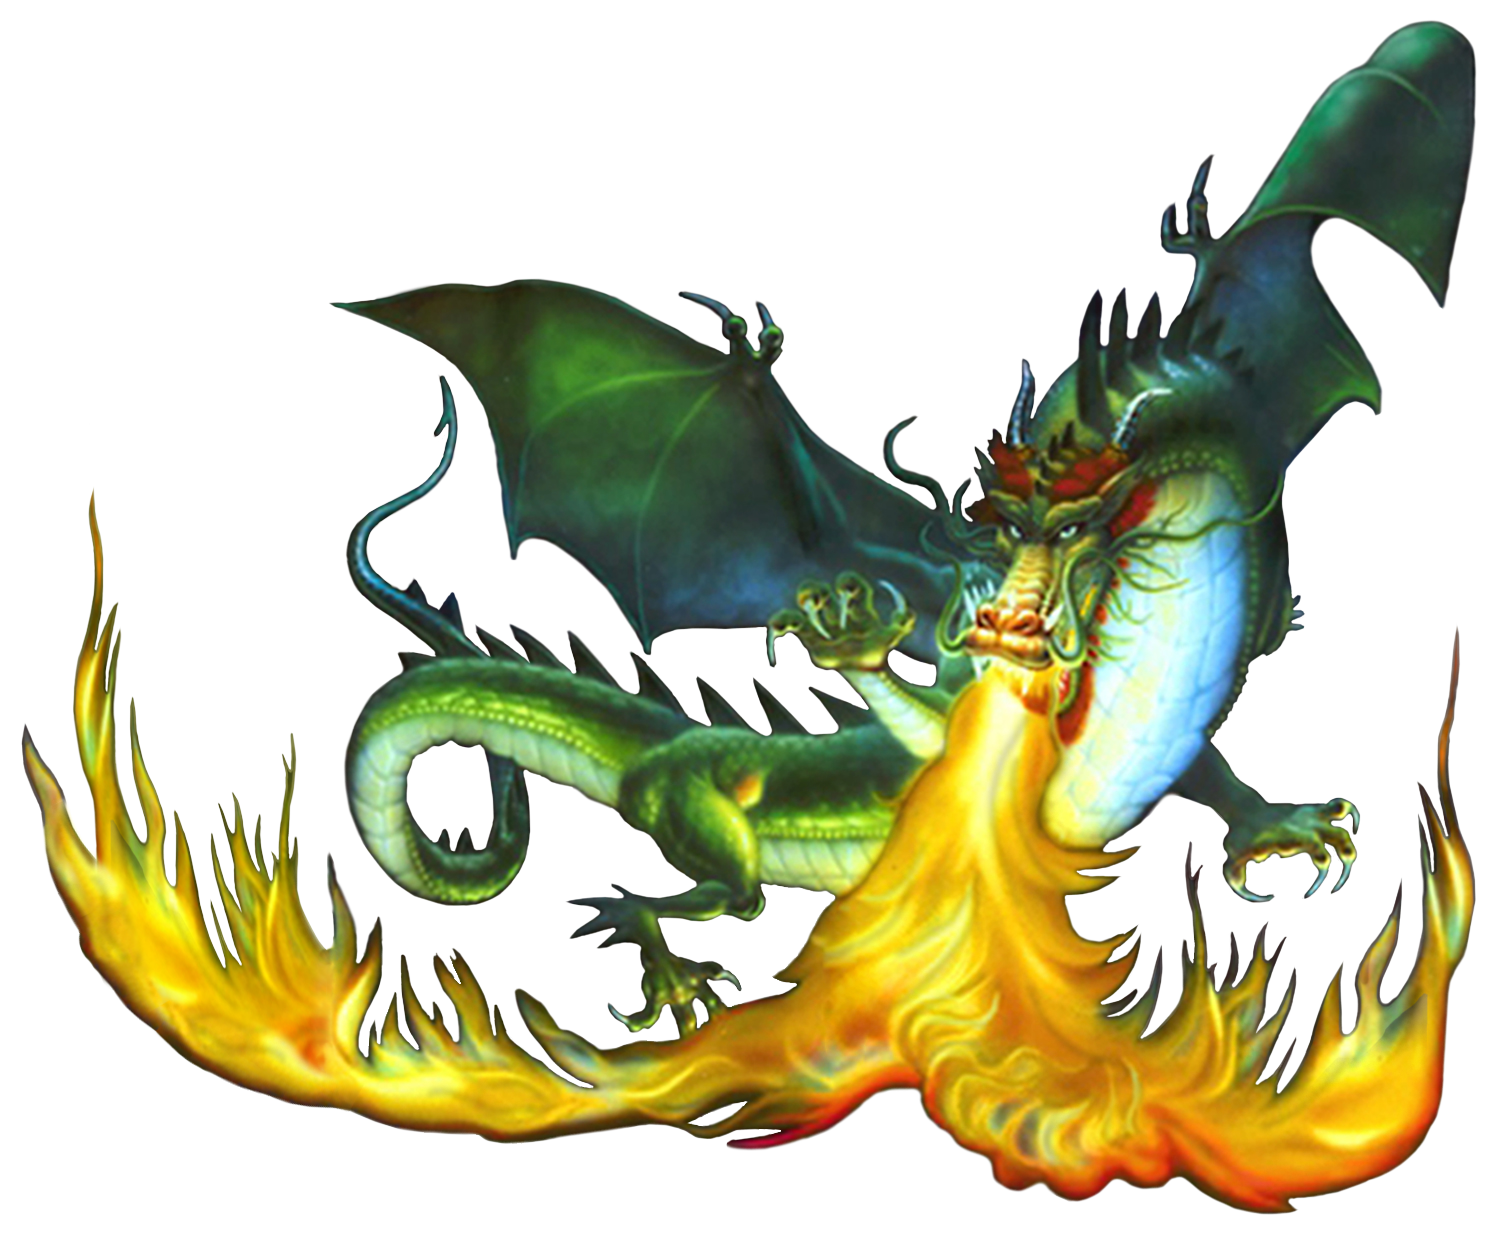 Image - Green dragon breathin